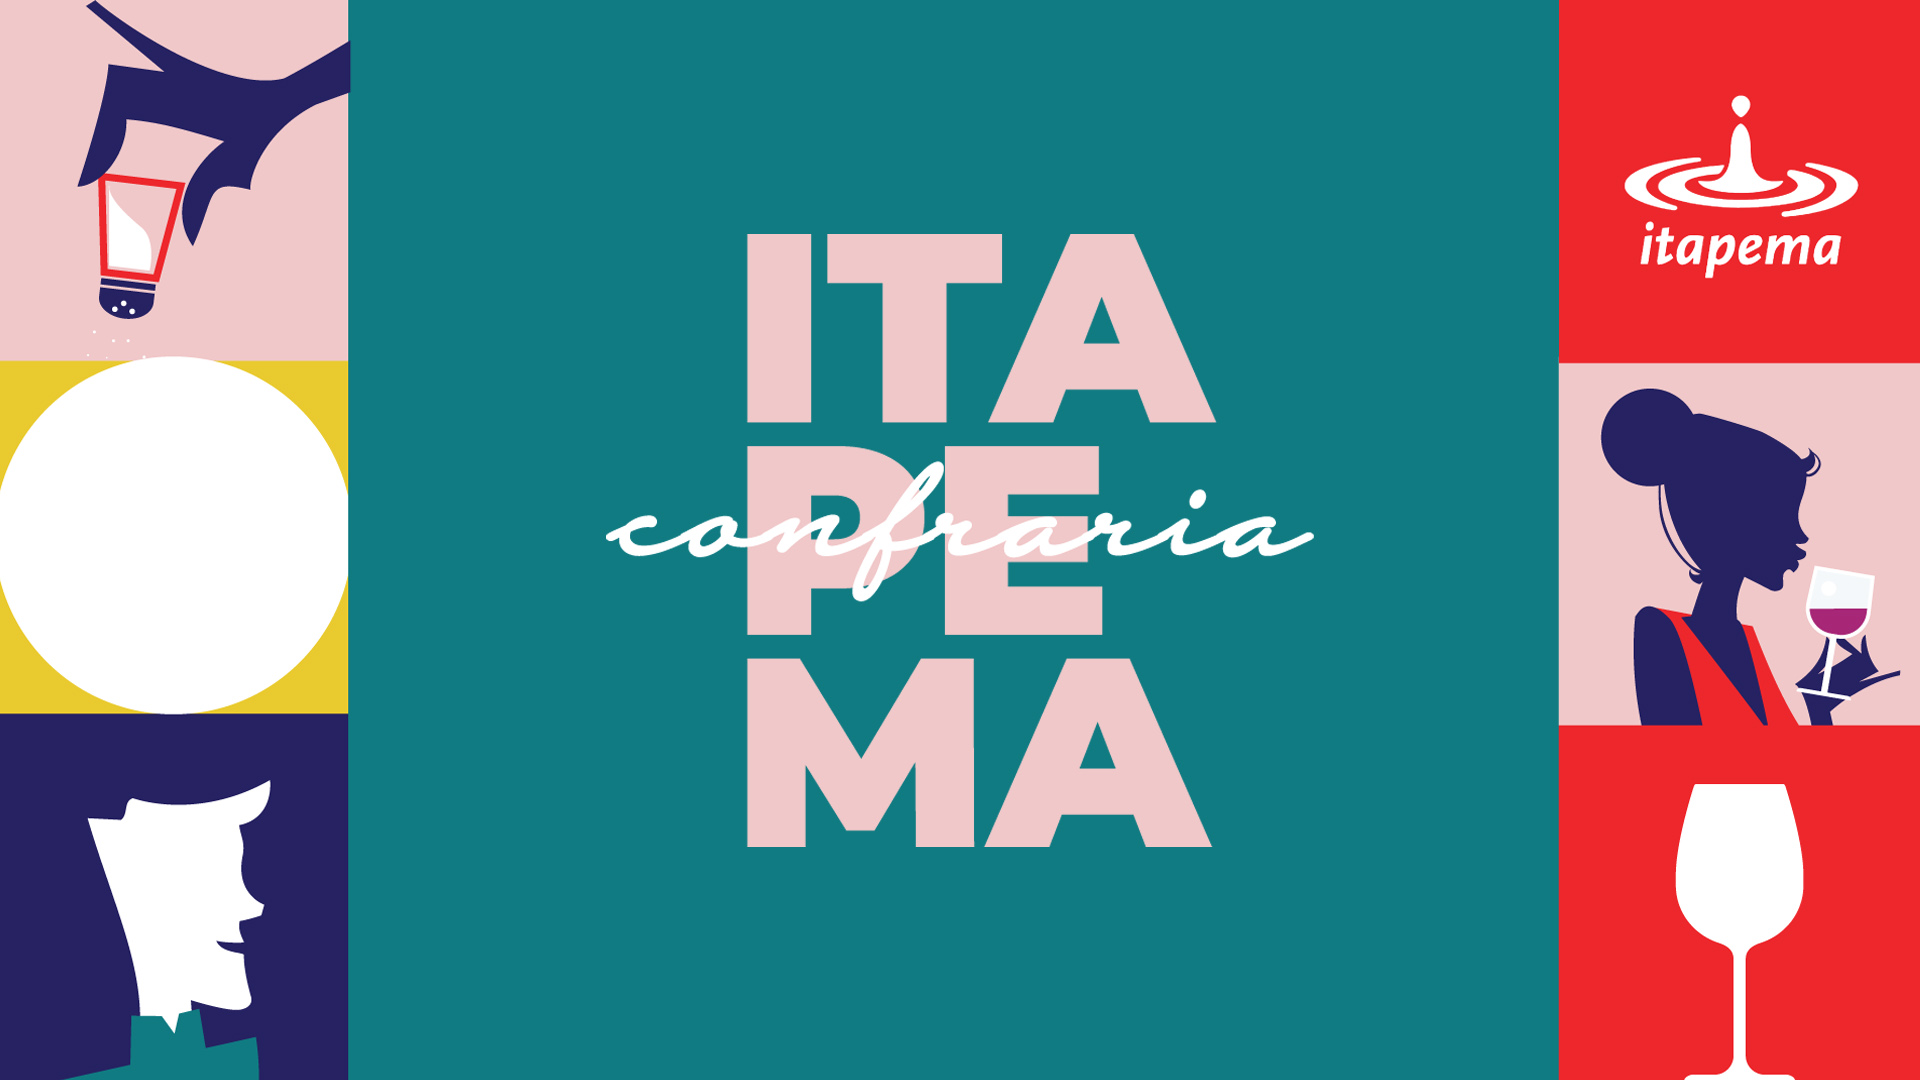 Confraria Itapema une marcas a um público seleto